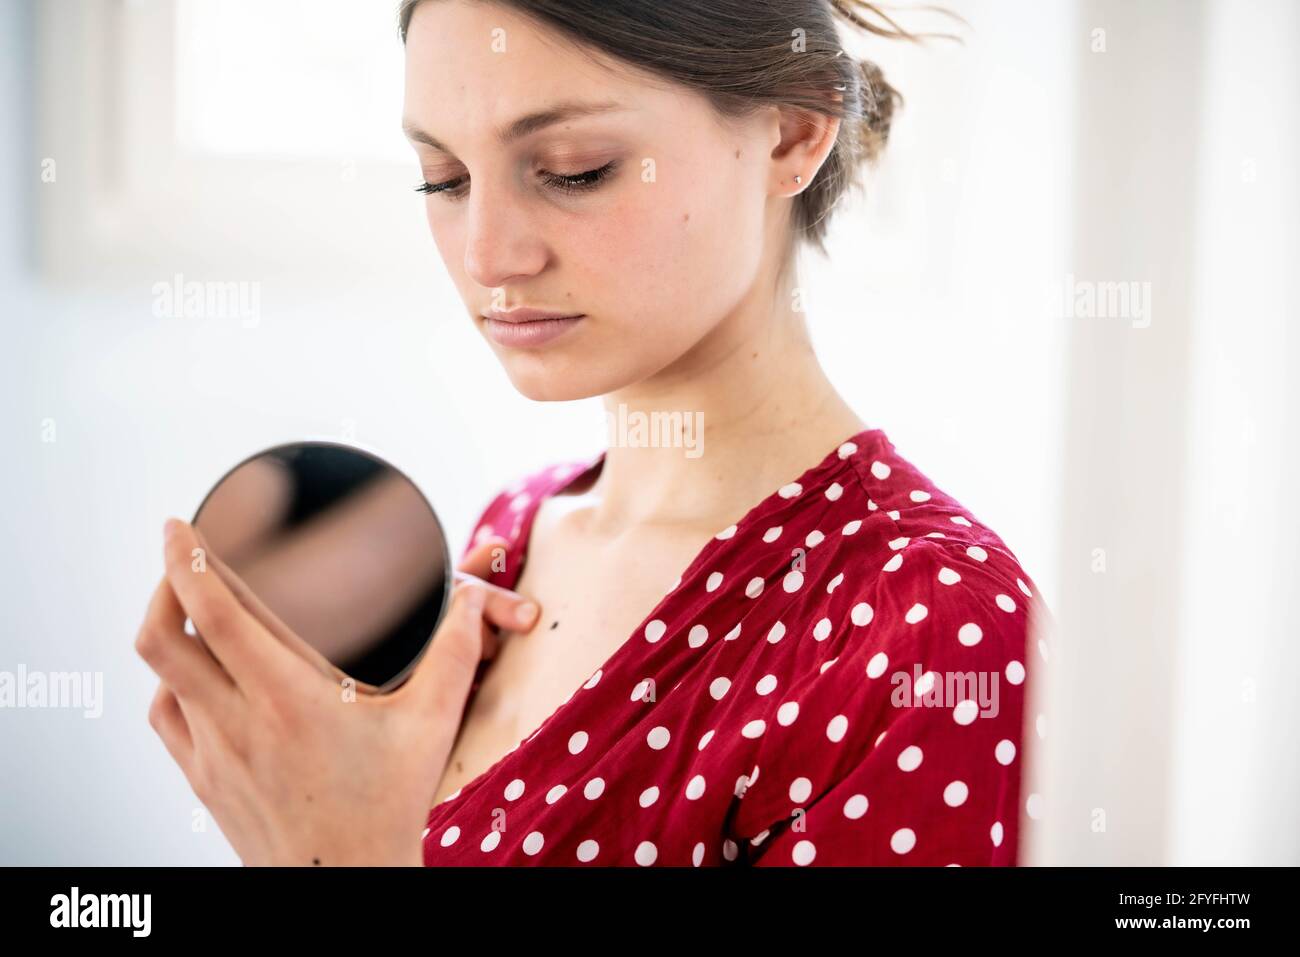 Woman inspecting a beauty mark. Stock Photo